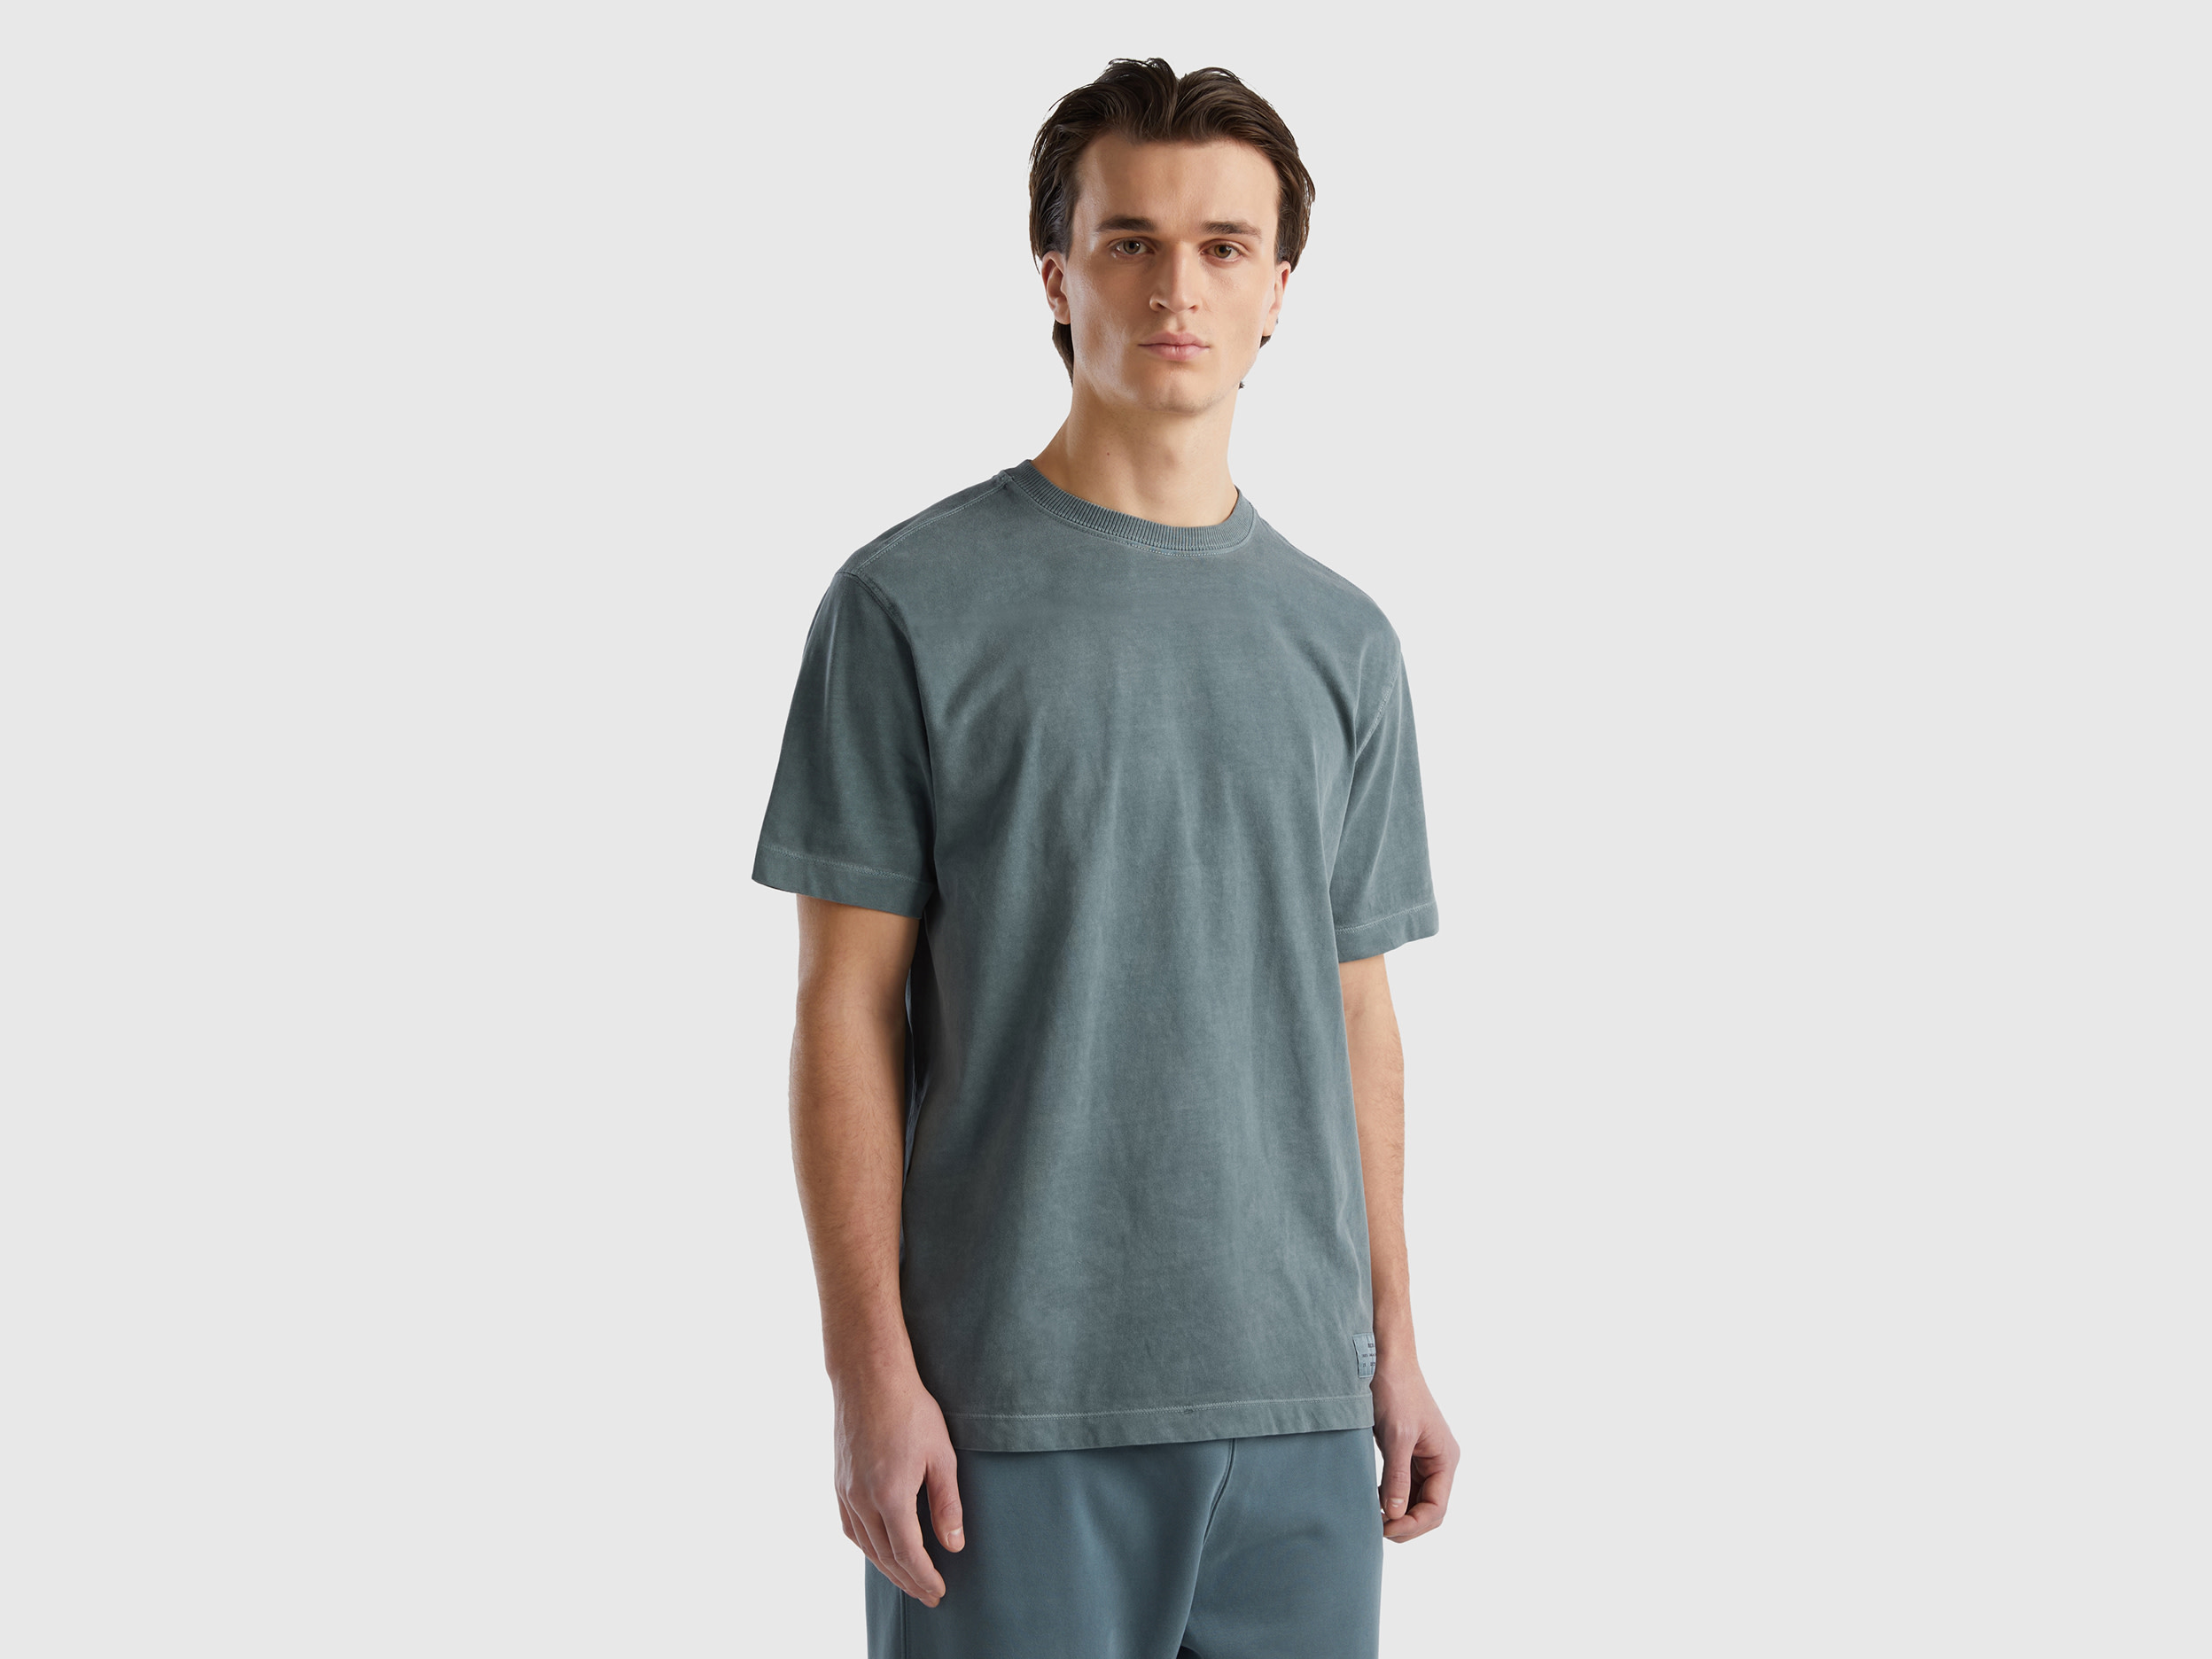 Benetton, 100% Organic Cotton Crew Neck T-shirt, size L, Dark Gray, Men